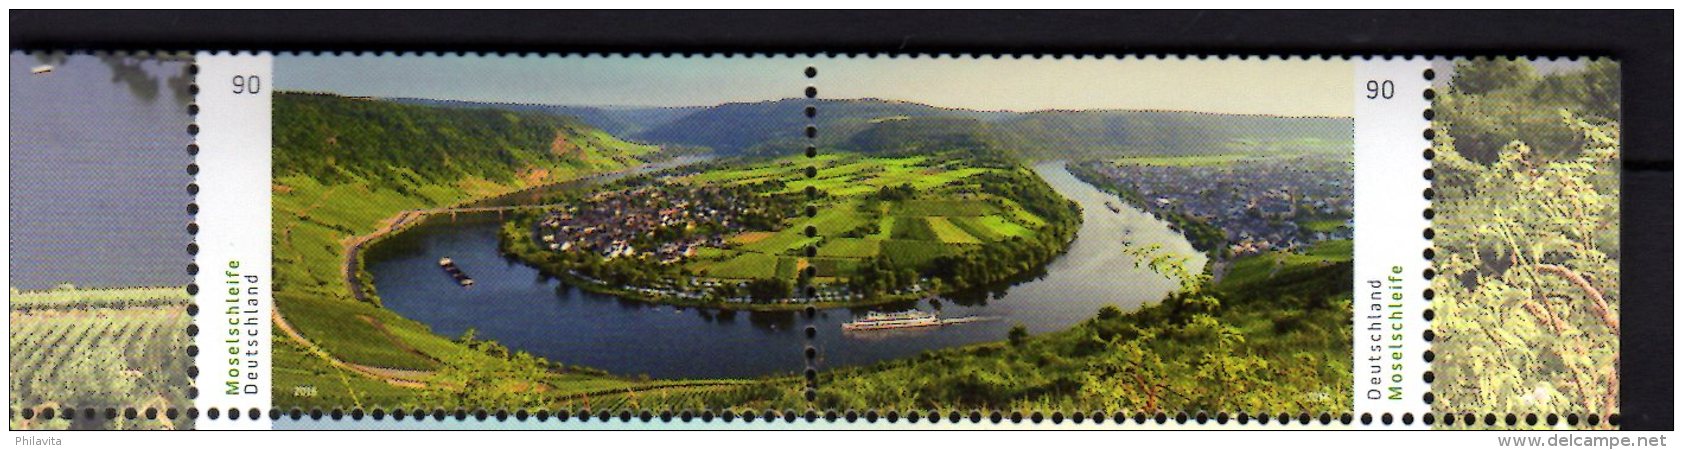 2016 Germany Beutiful Pannoramas - Mosel River Curve - Wineyards - Setenant Set Of 2 V Paper - MNH** MiNr. 3225 - 3226 - Wein & Alkohol